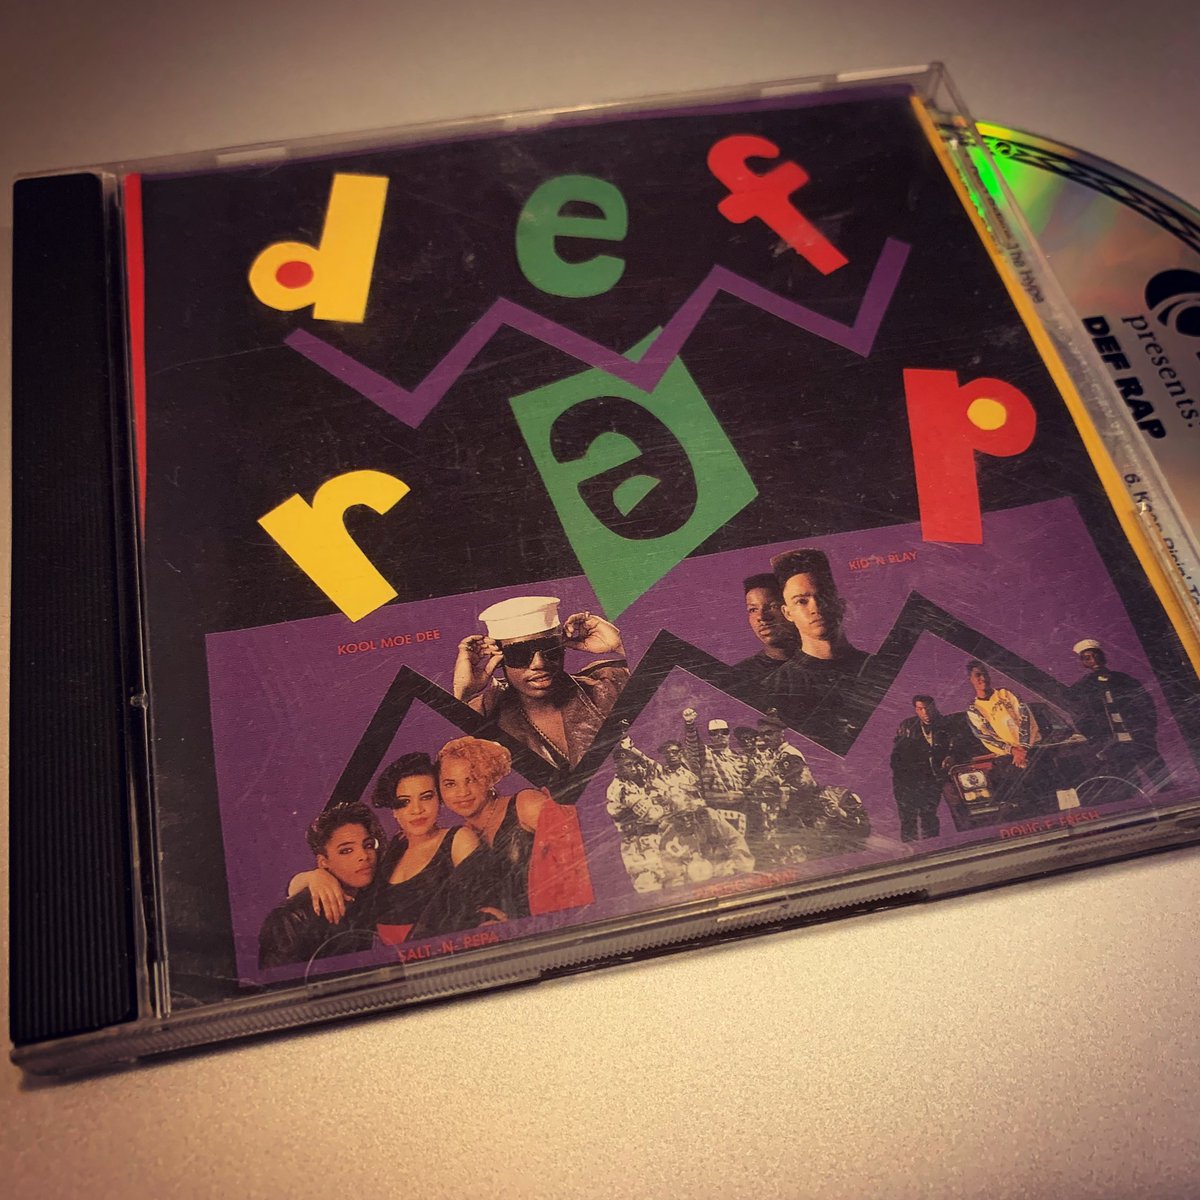 DEF RAP (1989) #publicenemy #2livecrew #koolmoedee #schoollyd #saltnpepa #dougefresh #thegetfreshcrew #epmd #ultramagneticmcs #kidnplay #sirmixalot #classic #hiphop #ktel #international #hiphopgods